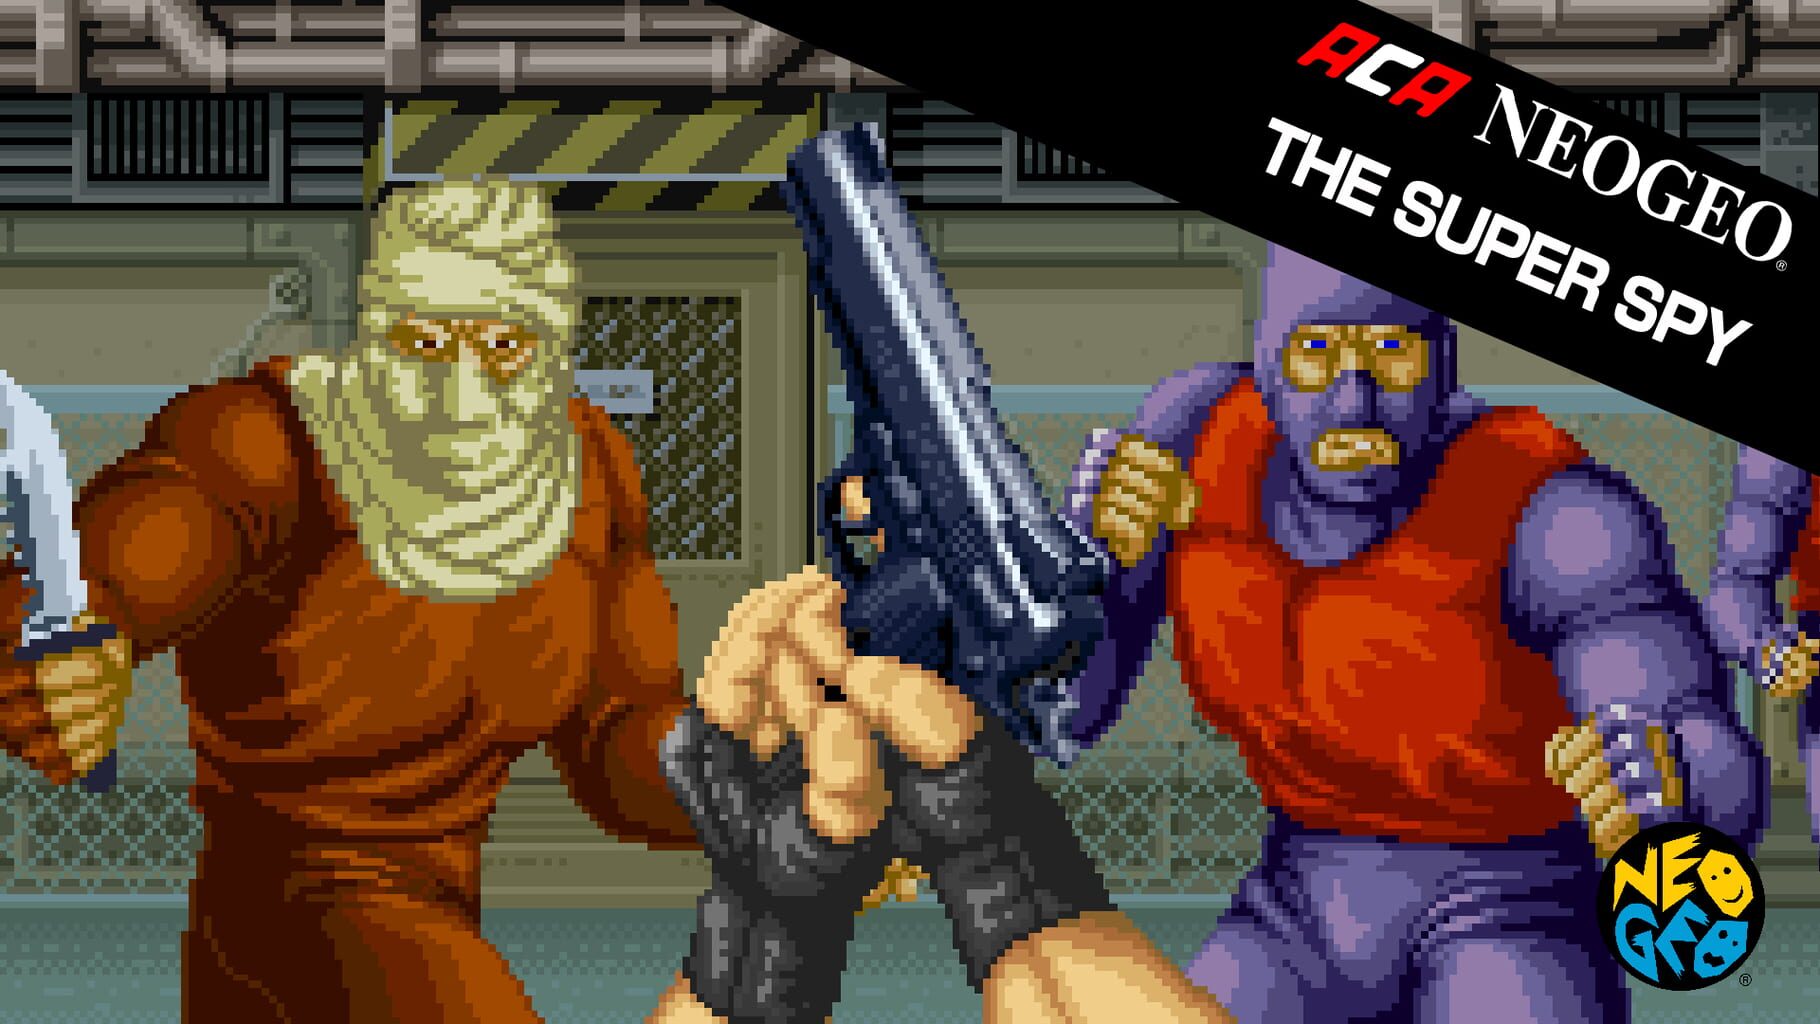 ACA Neo Geo: The Super Spy artwork